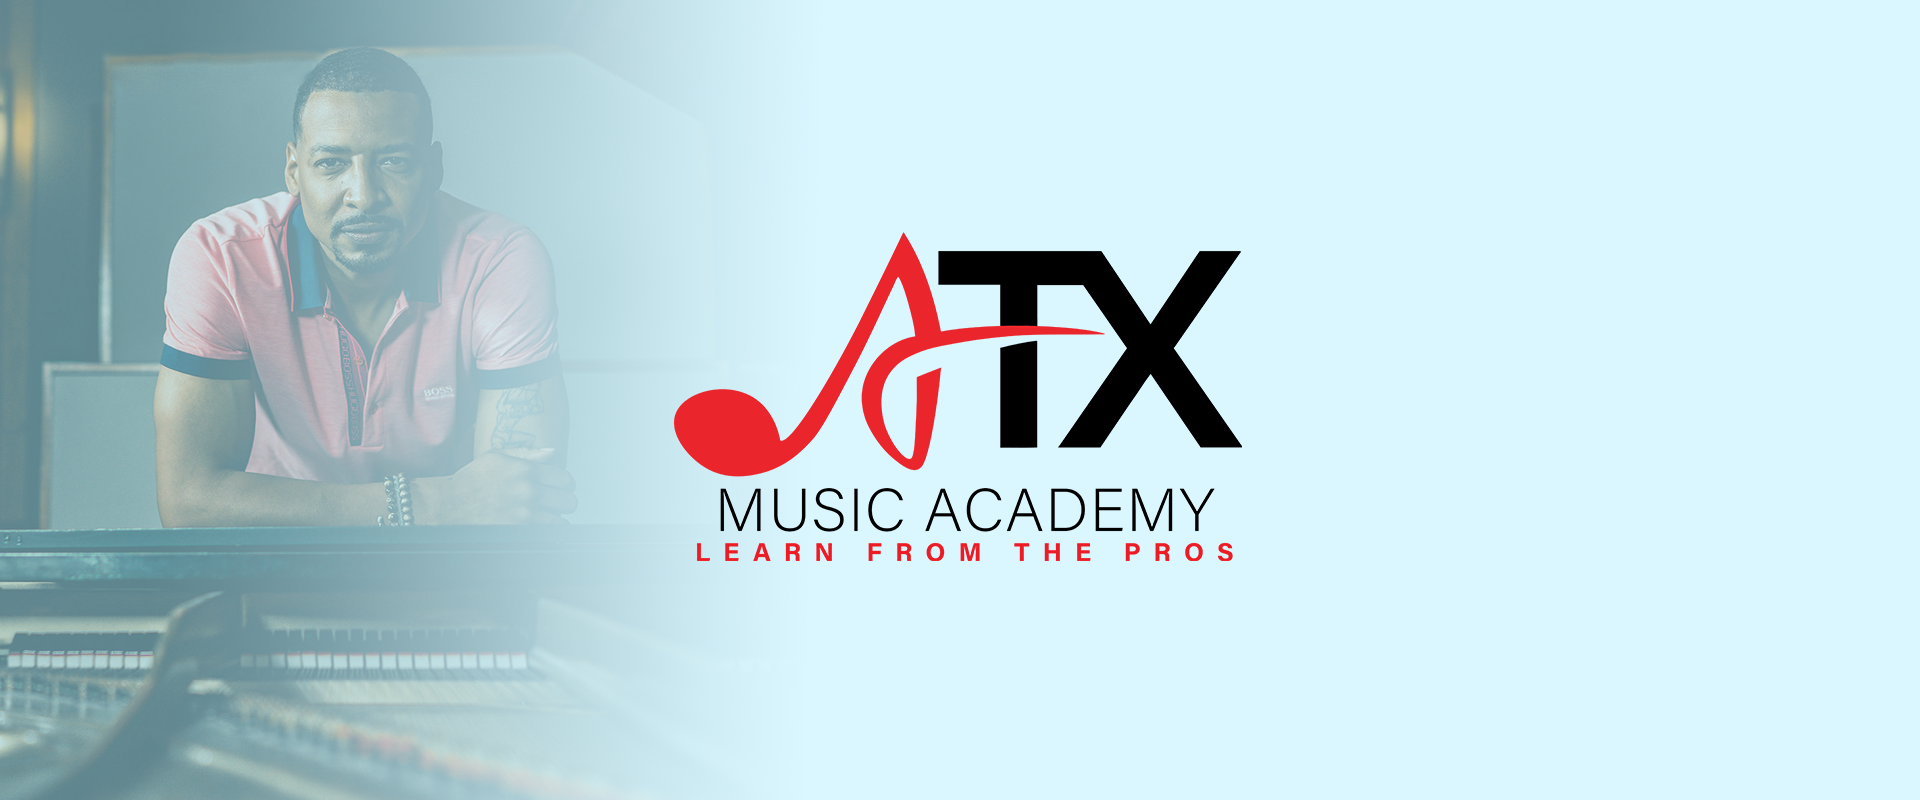 Austin Texas Music school and music academy.  